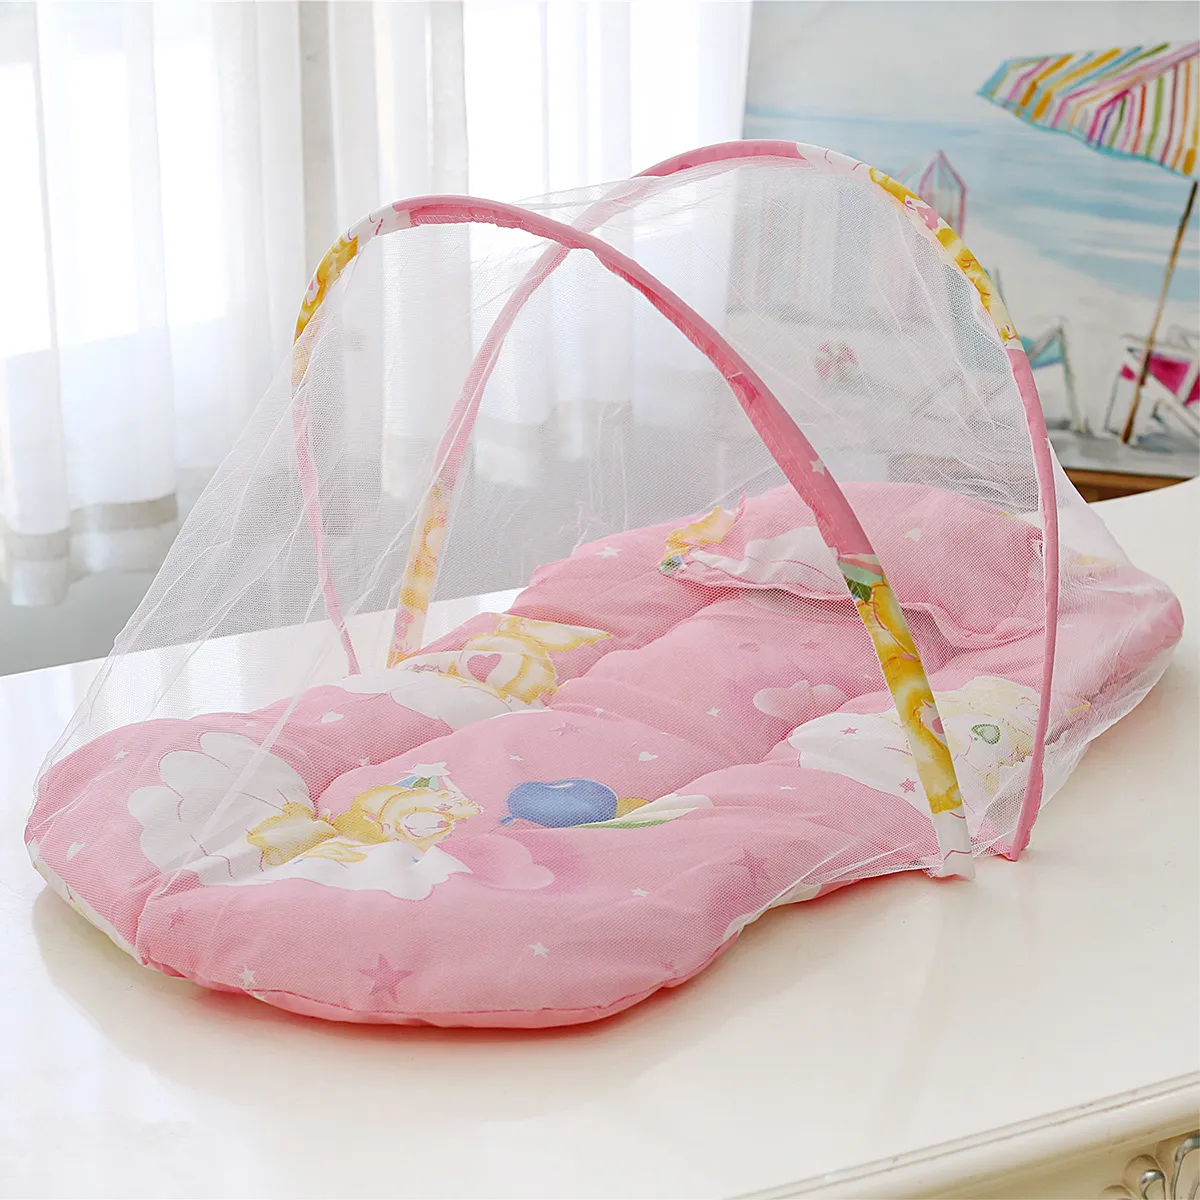 Unisex Animal Pattern Baby Sleeping Bag/Bedding Set with Mosquito Net  Pink big image 1